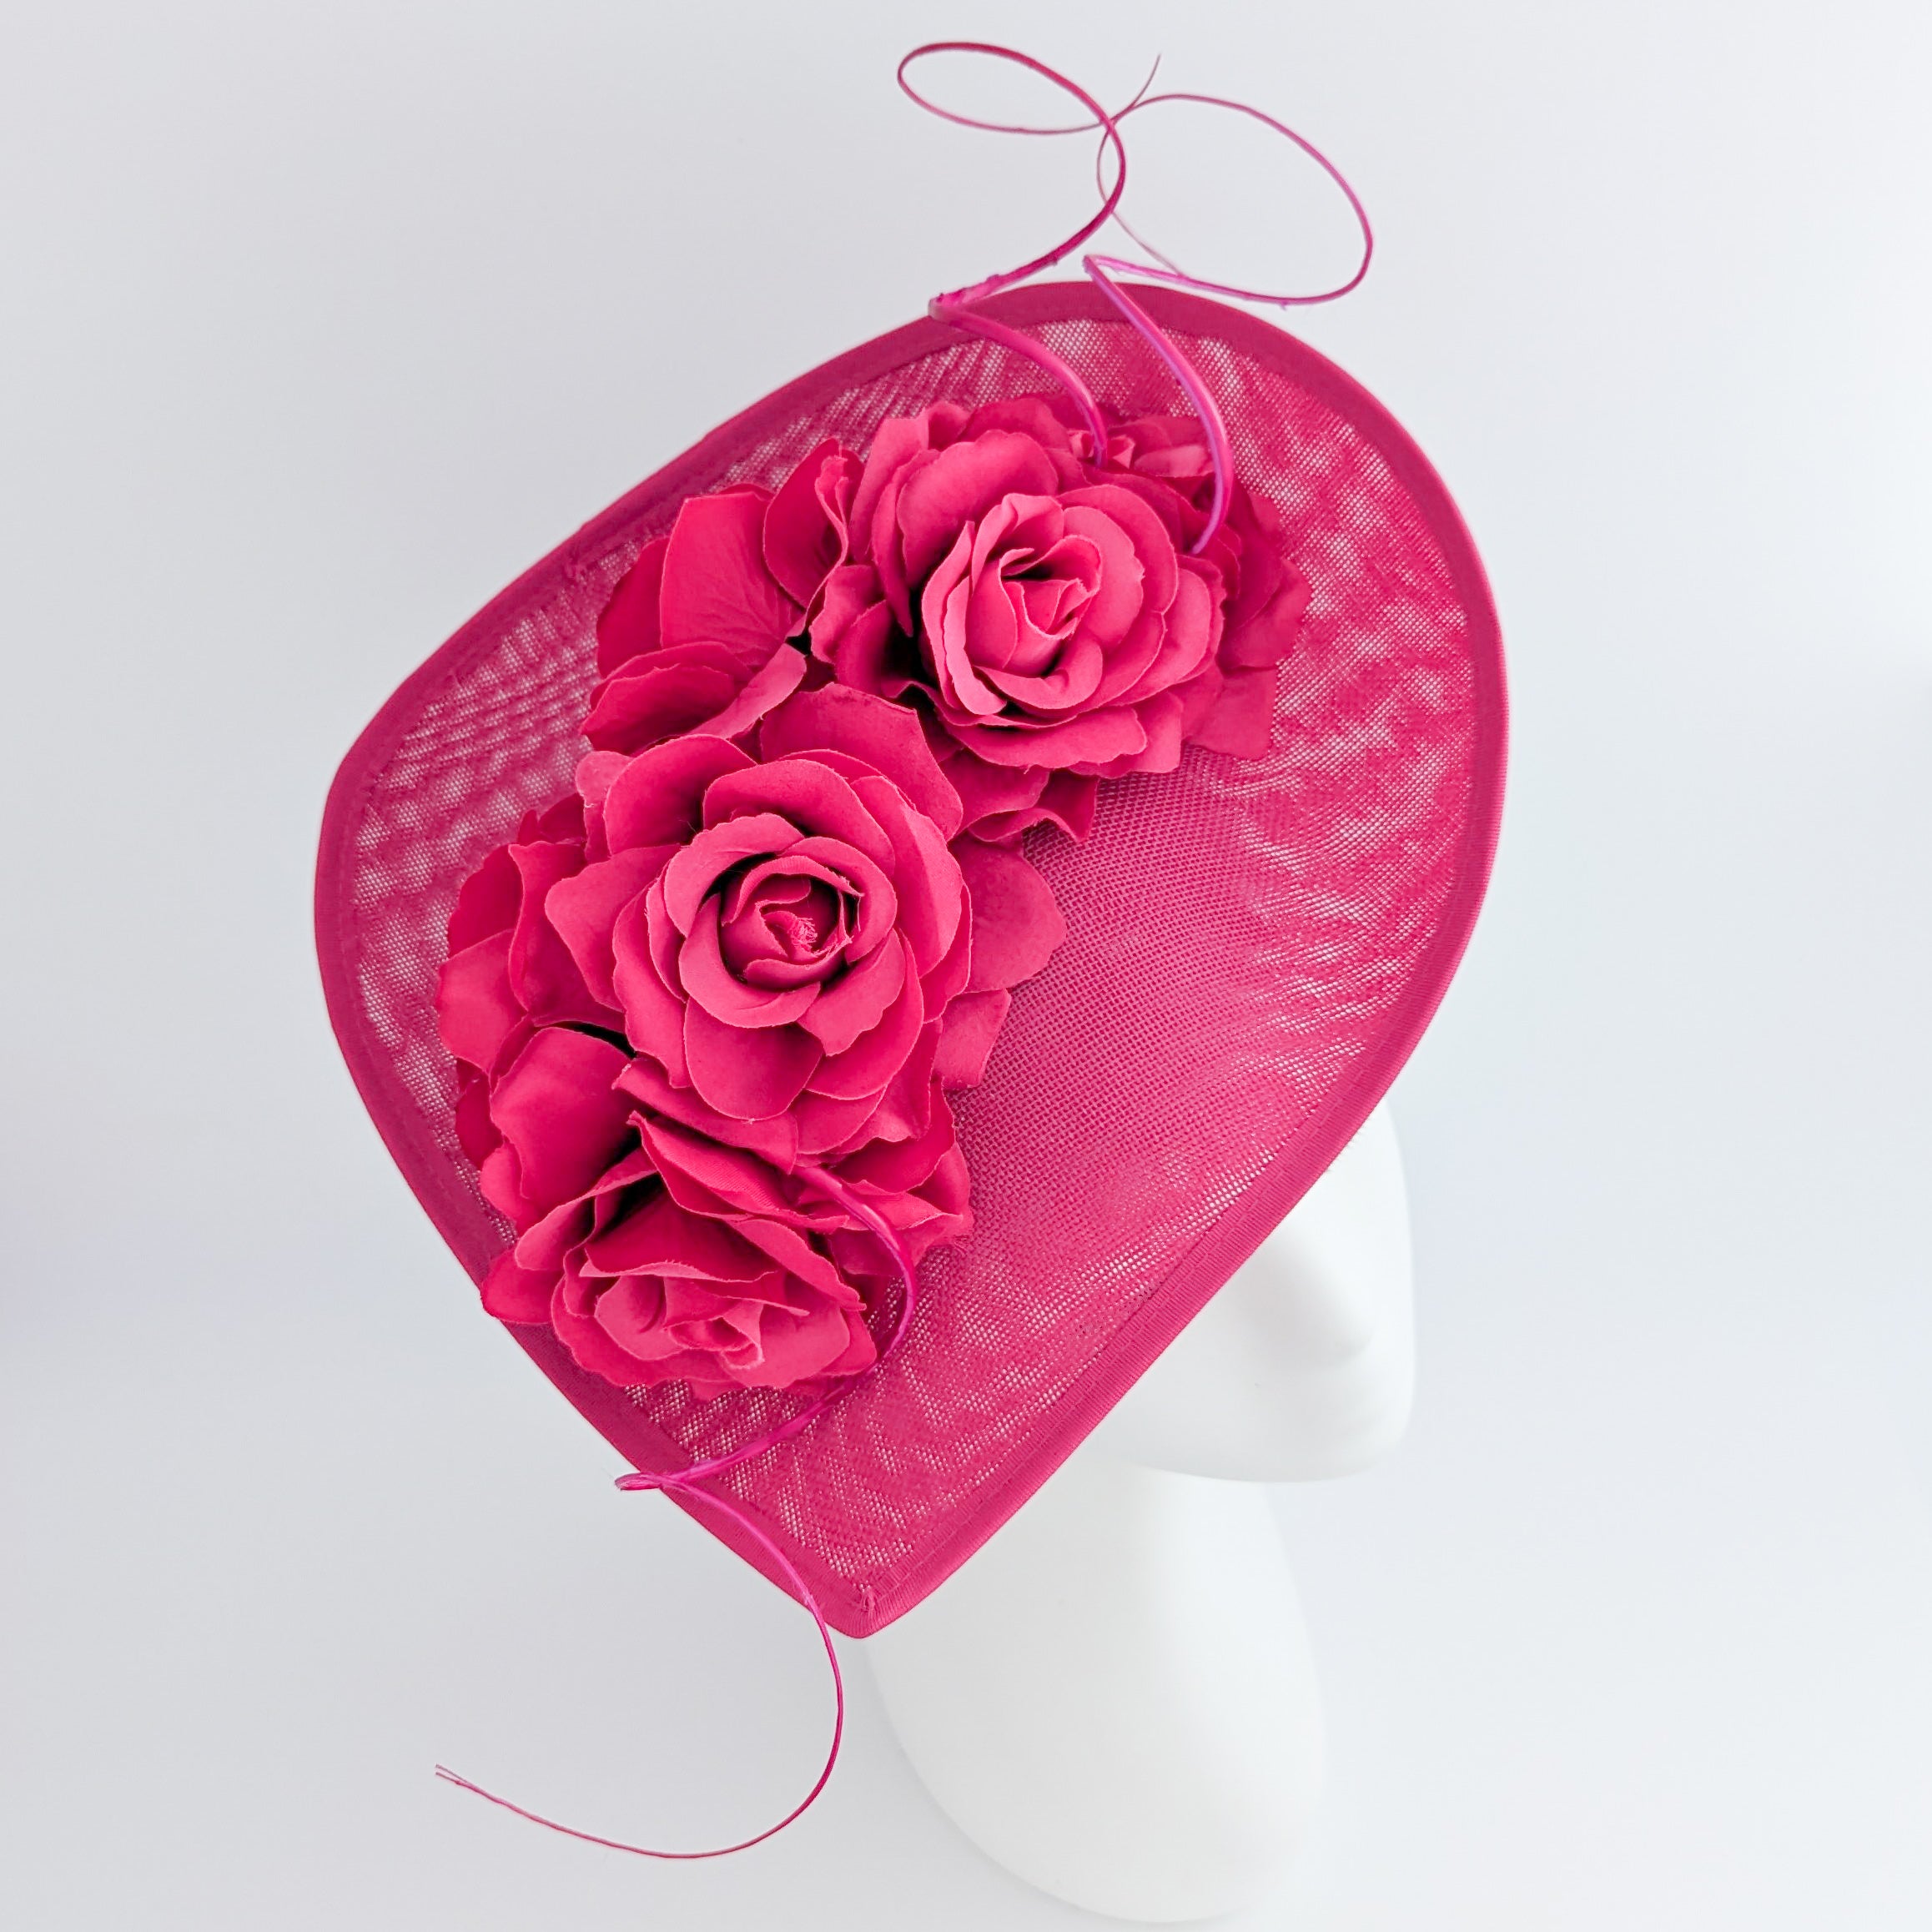 Fuchsia pink large teardrop rose flower fascinator hat